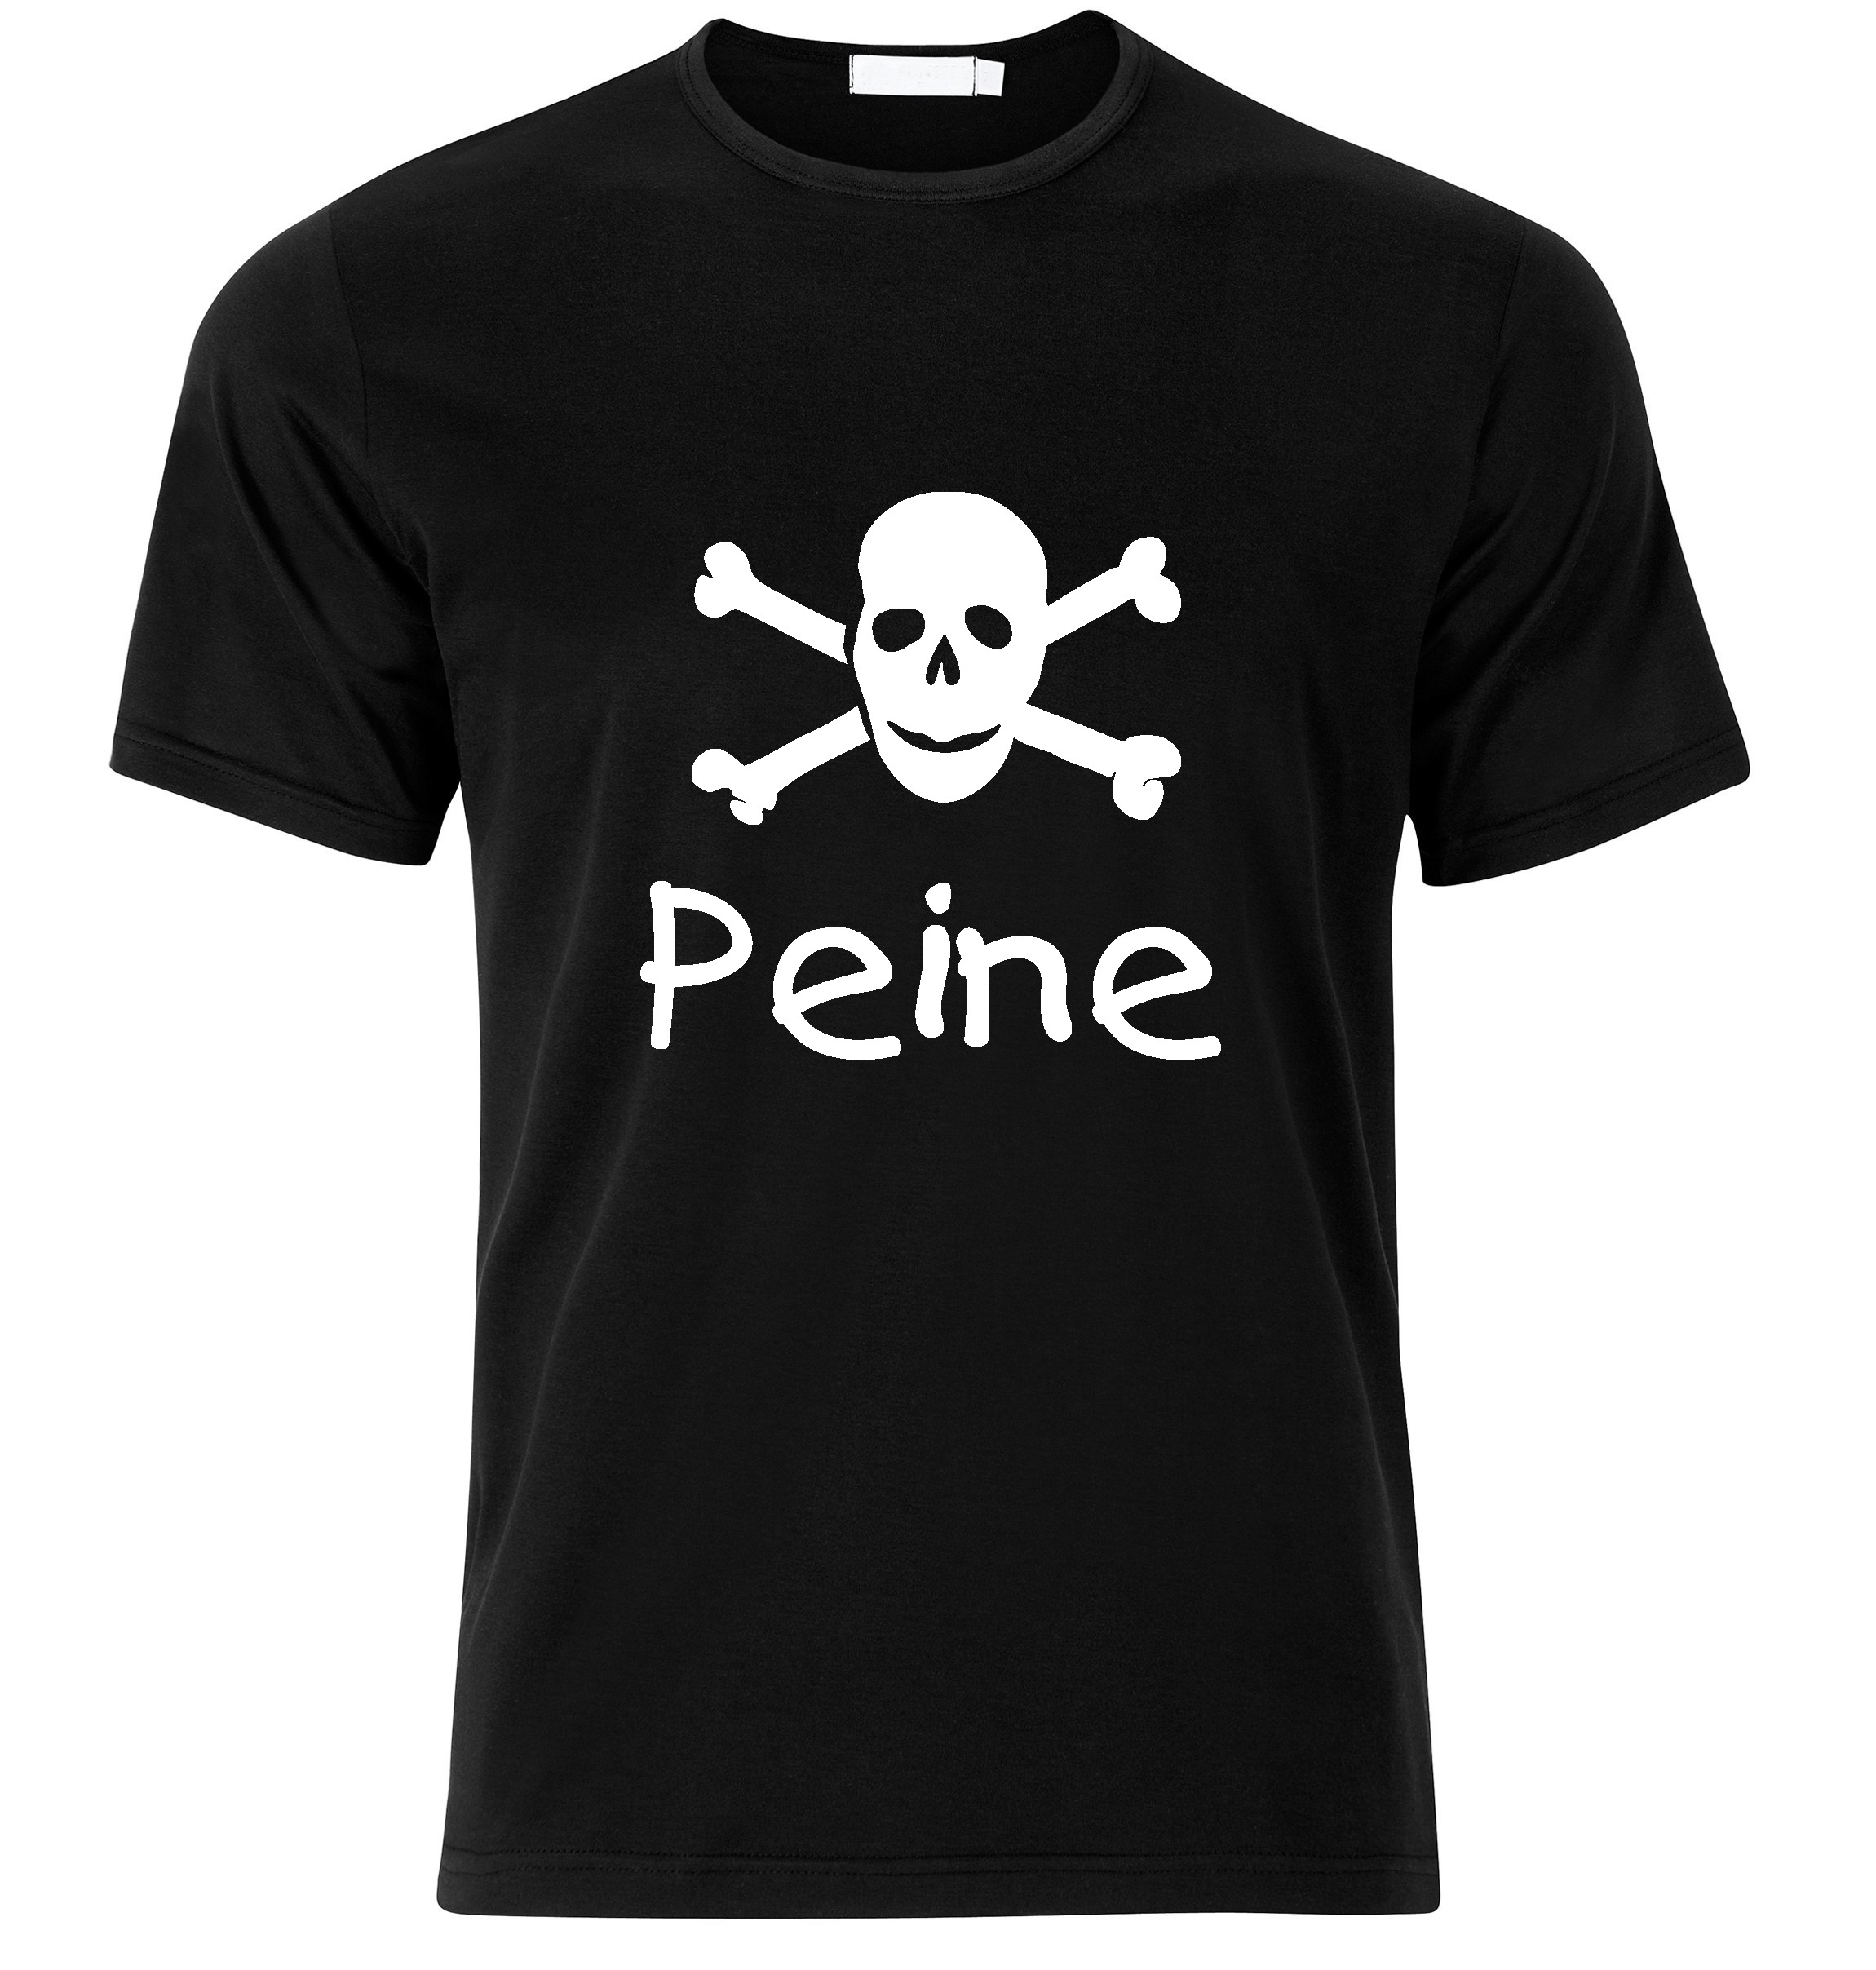 T-Shirt Peine Jolly Roger, Totenkopf